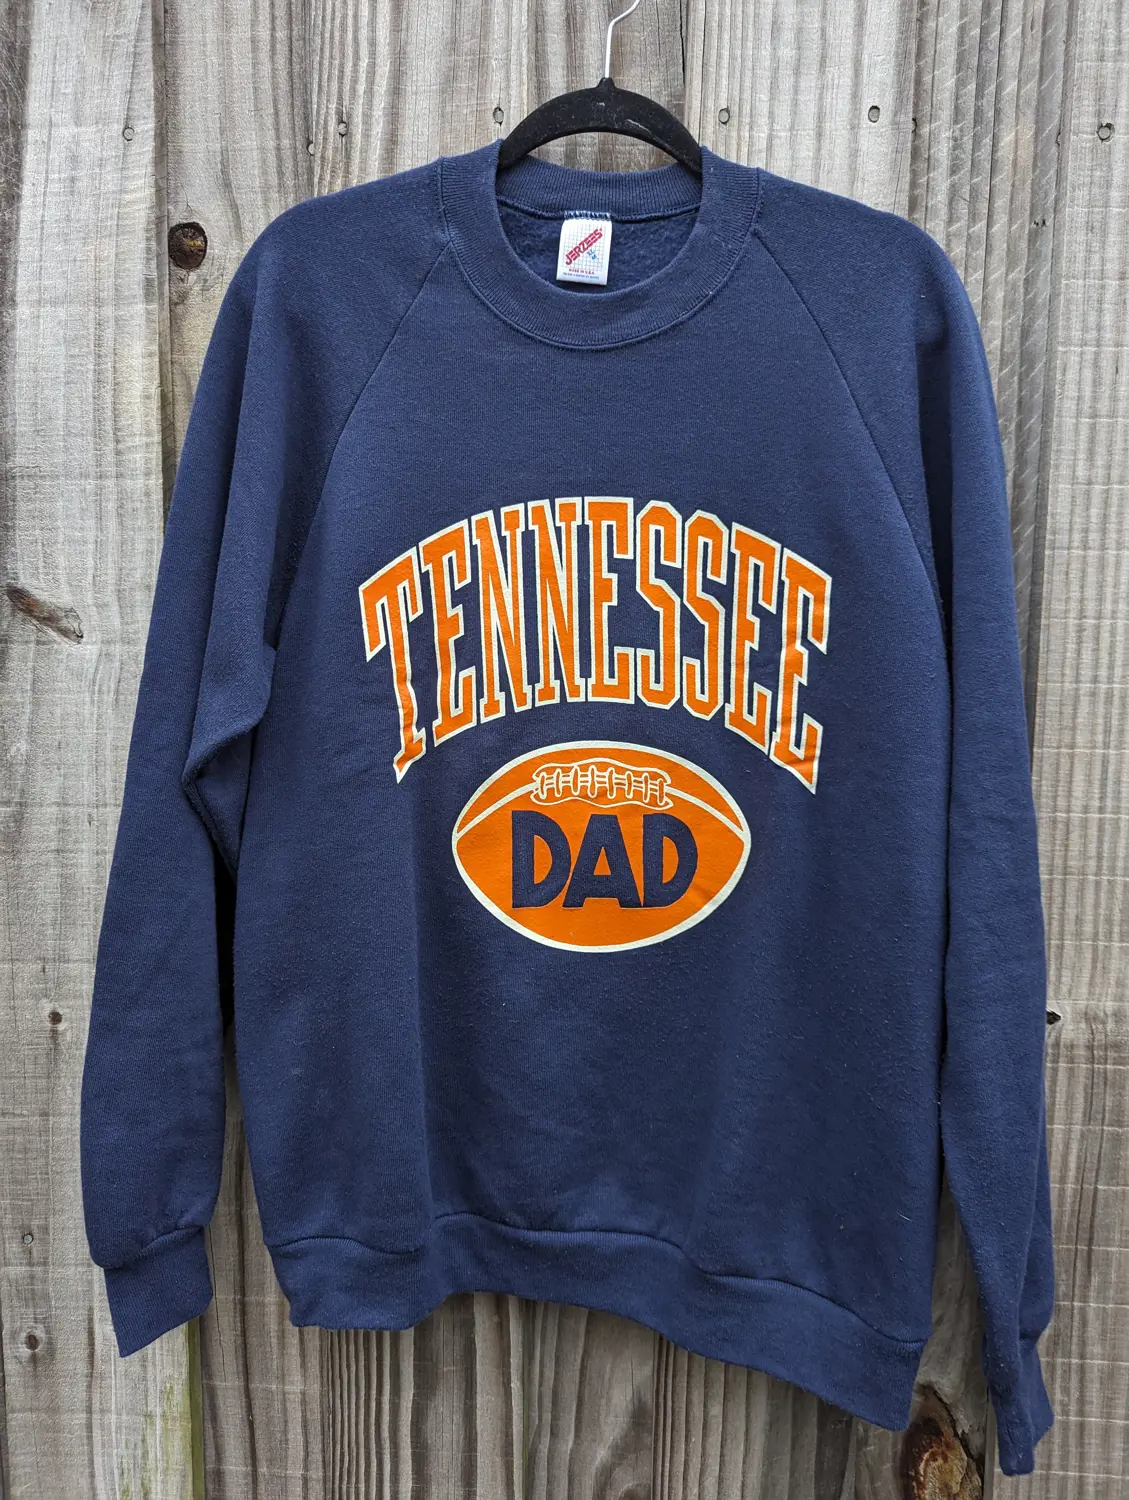 Vintage Tennessee Vols "Dad" Crewneck Sweatshirt Size XL